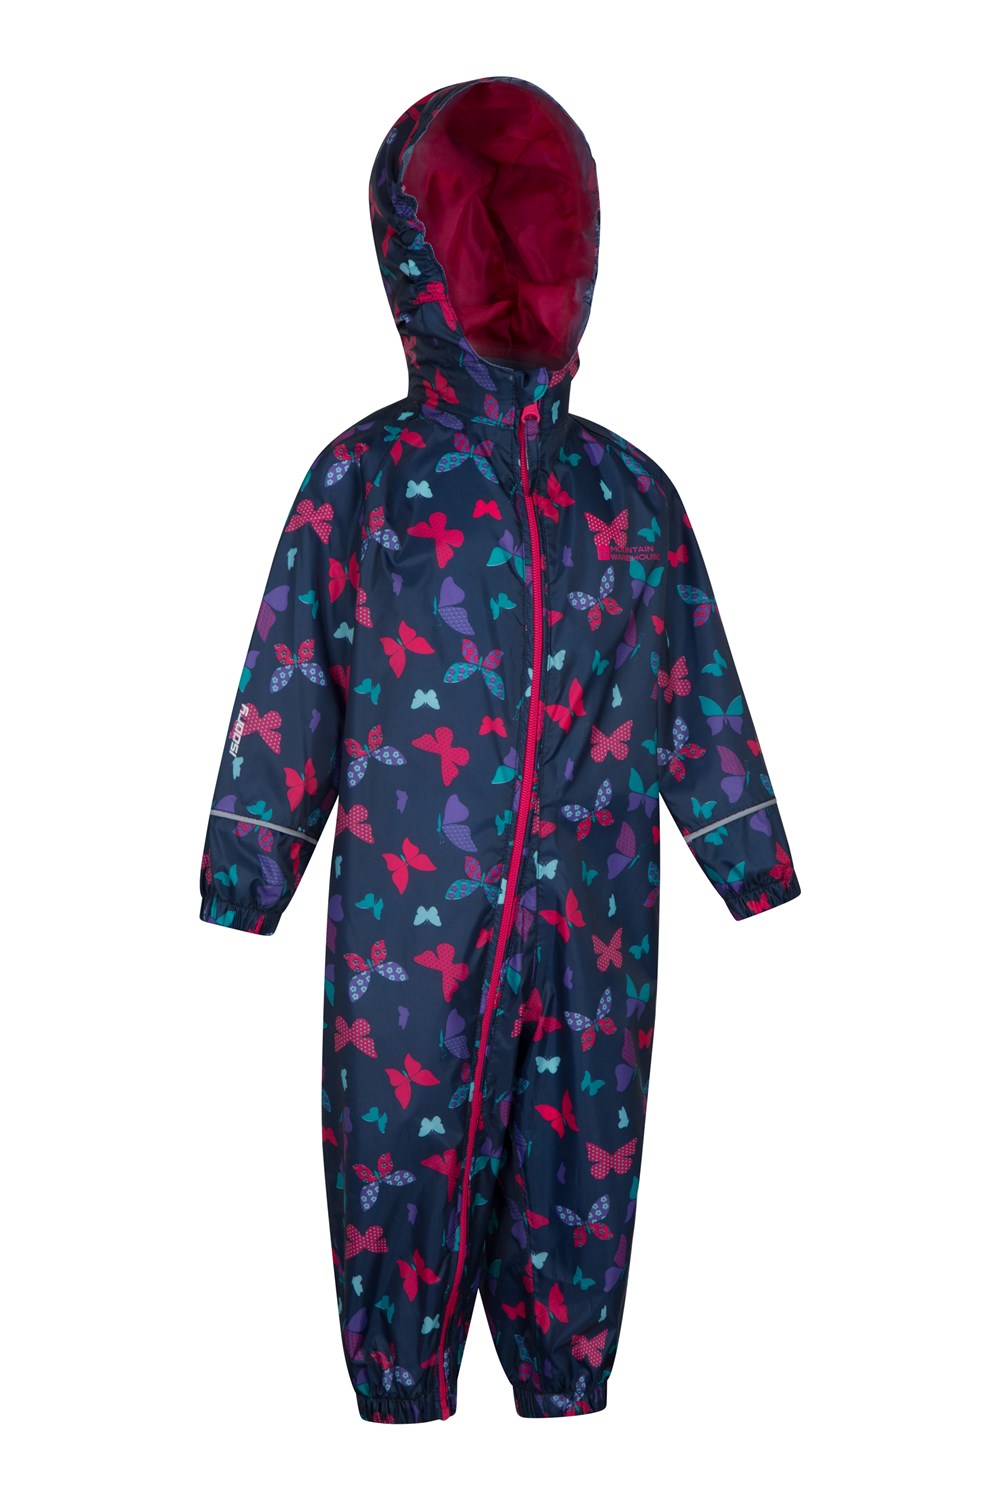 Mountain Warehouse Puddle Kids Printed Waterproof Rain Suit | eBay